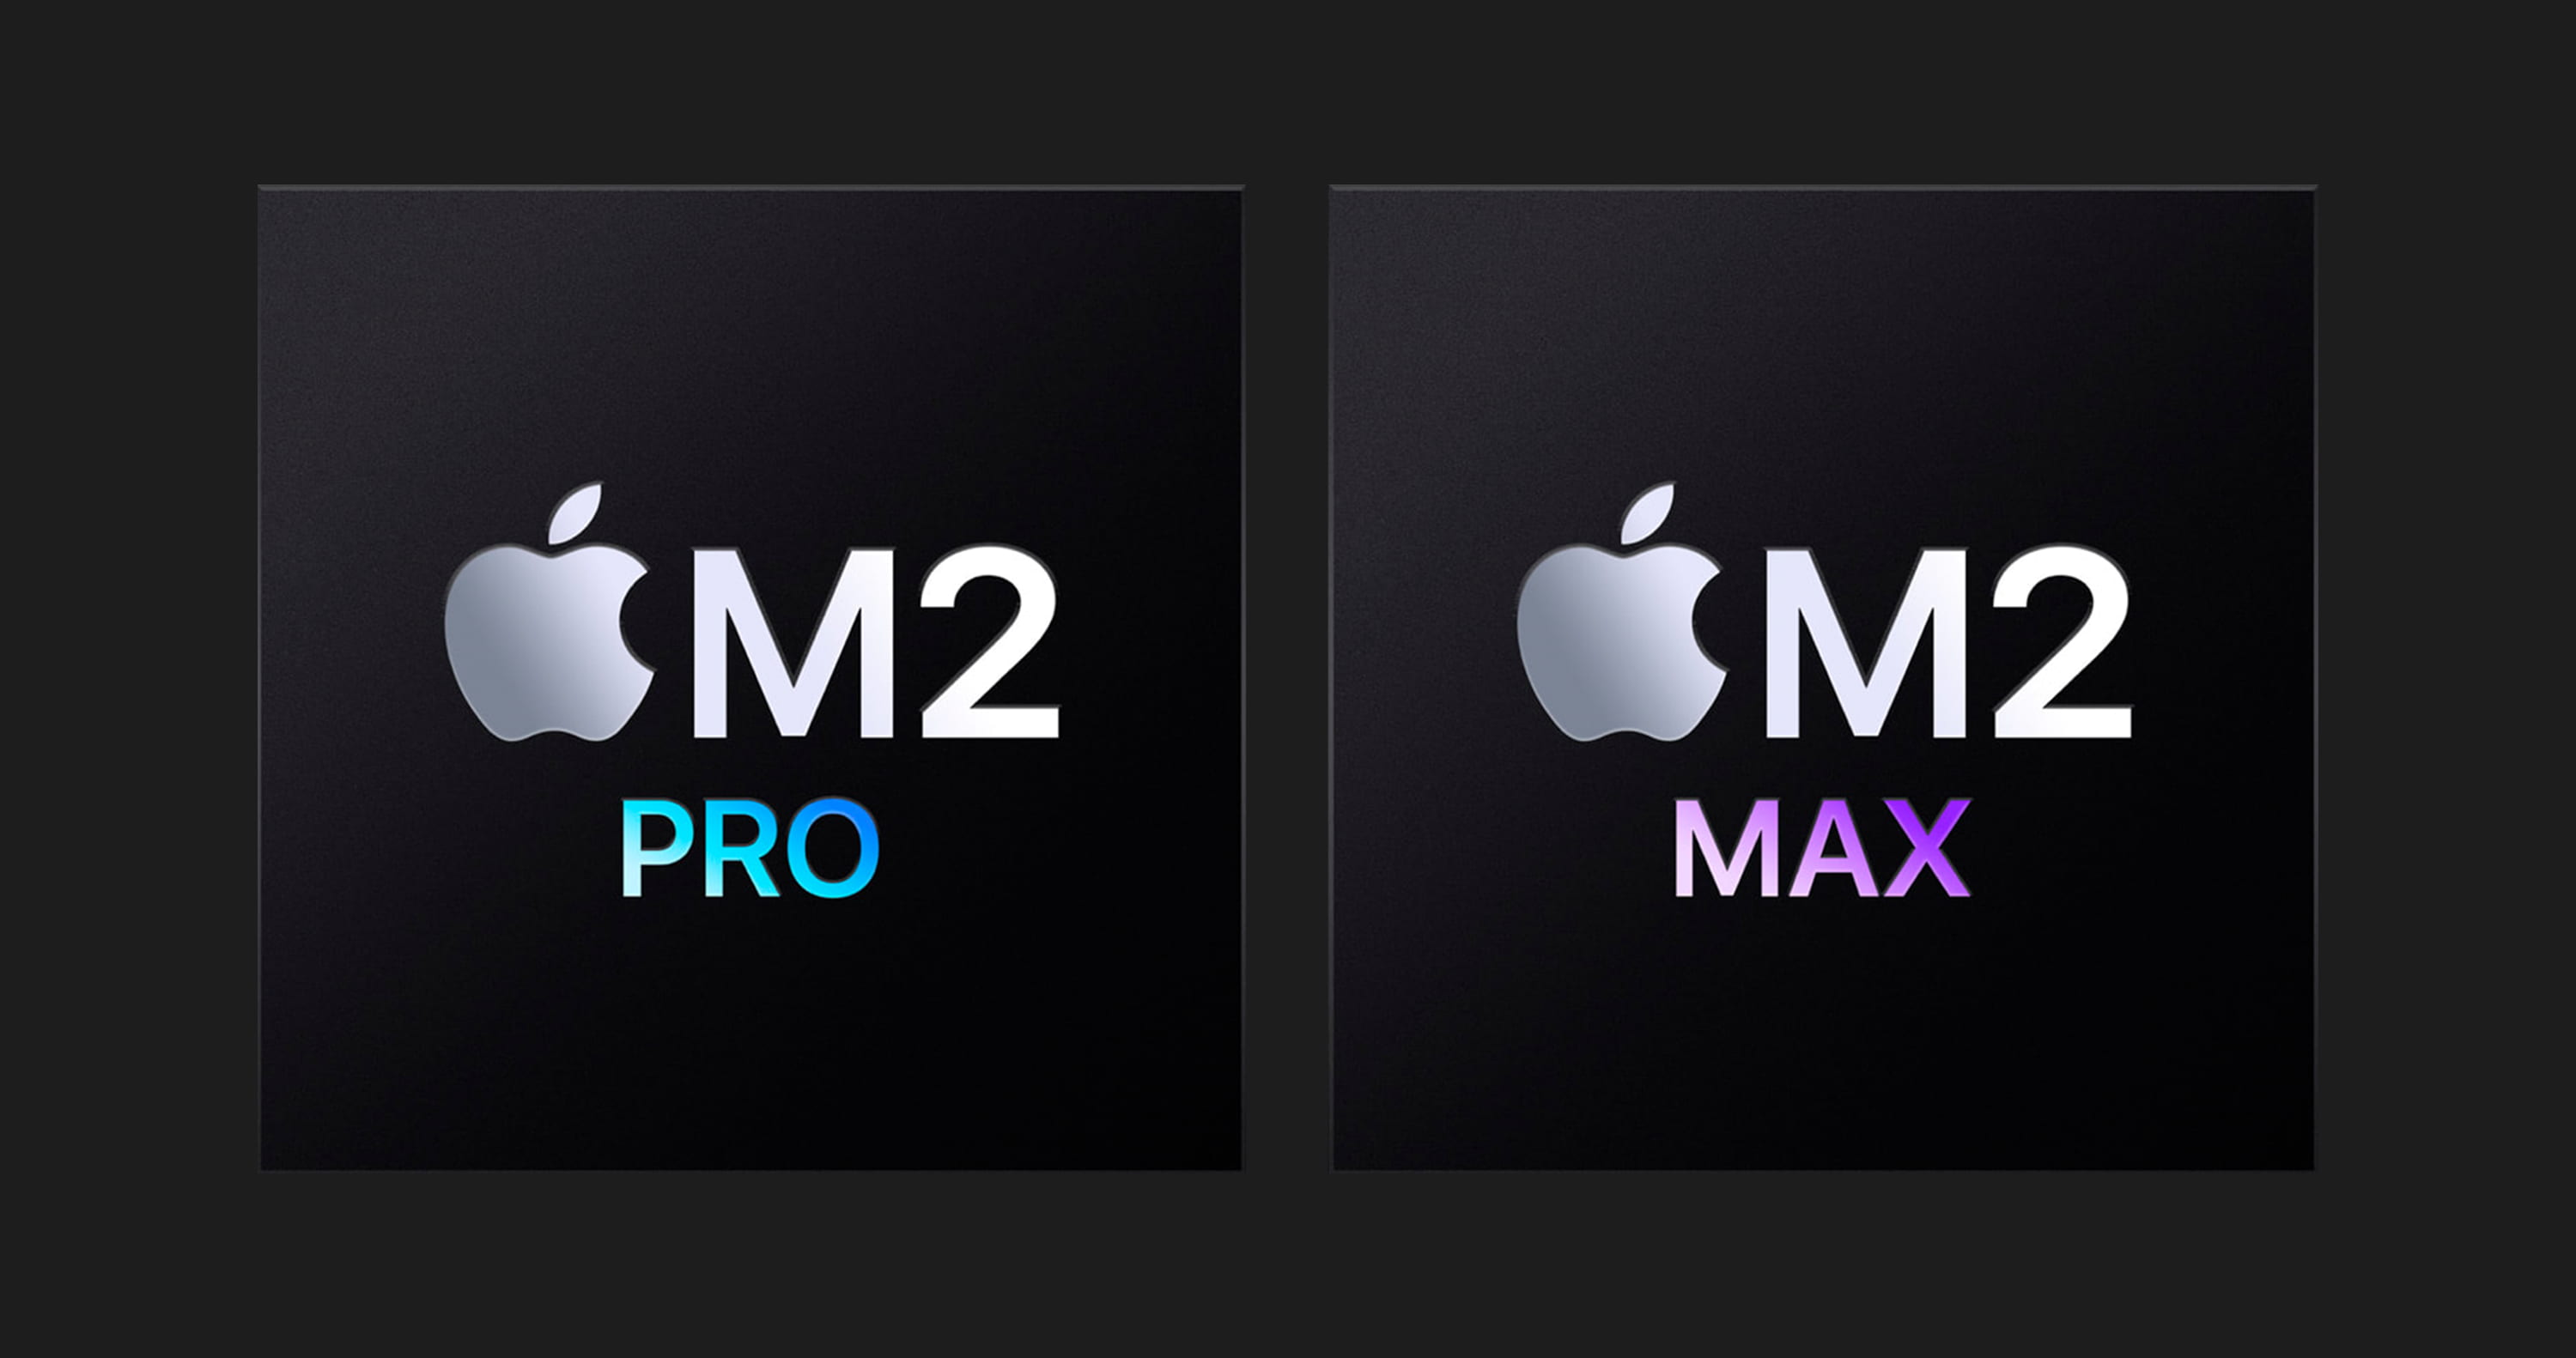 Apple MacBook Pro 16 with Apple M2 Max, 12 CPU / 38 GPU, 96GB RAM, 2TB SSD (Space Gray) (Z17400180)